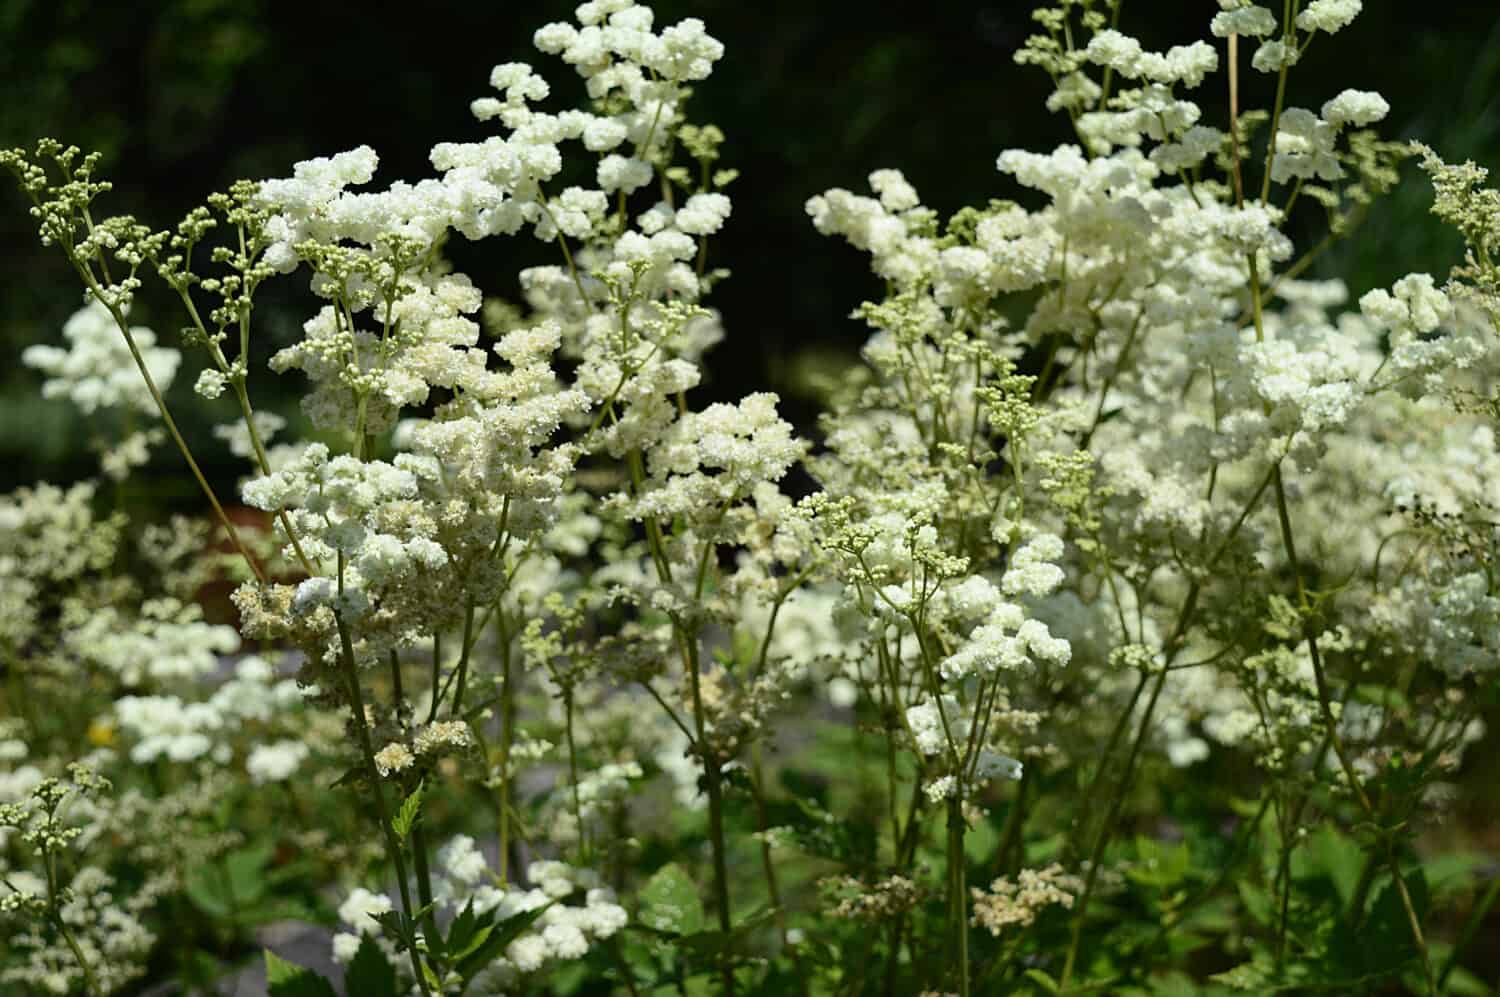 Closeup filipendula ulmaria - very ornamental plant with blurred background in damp meadow